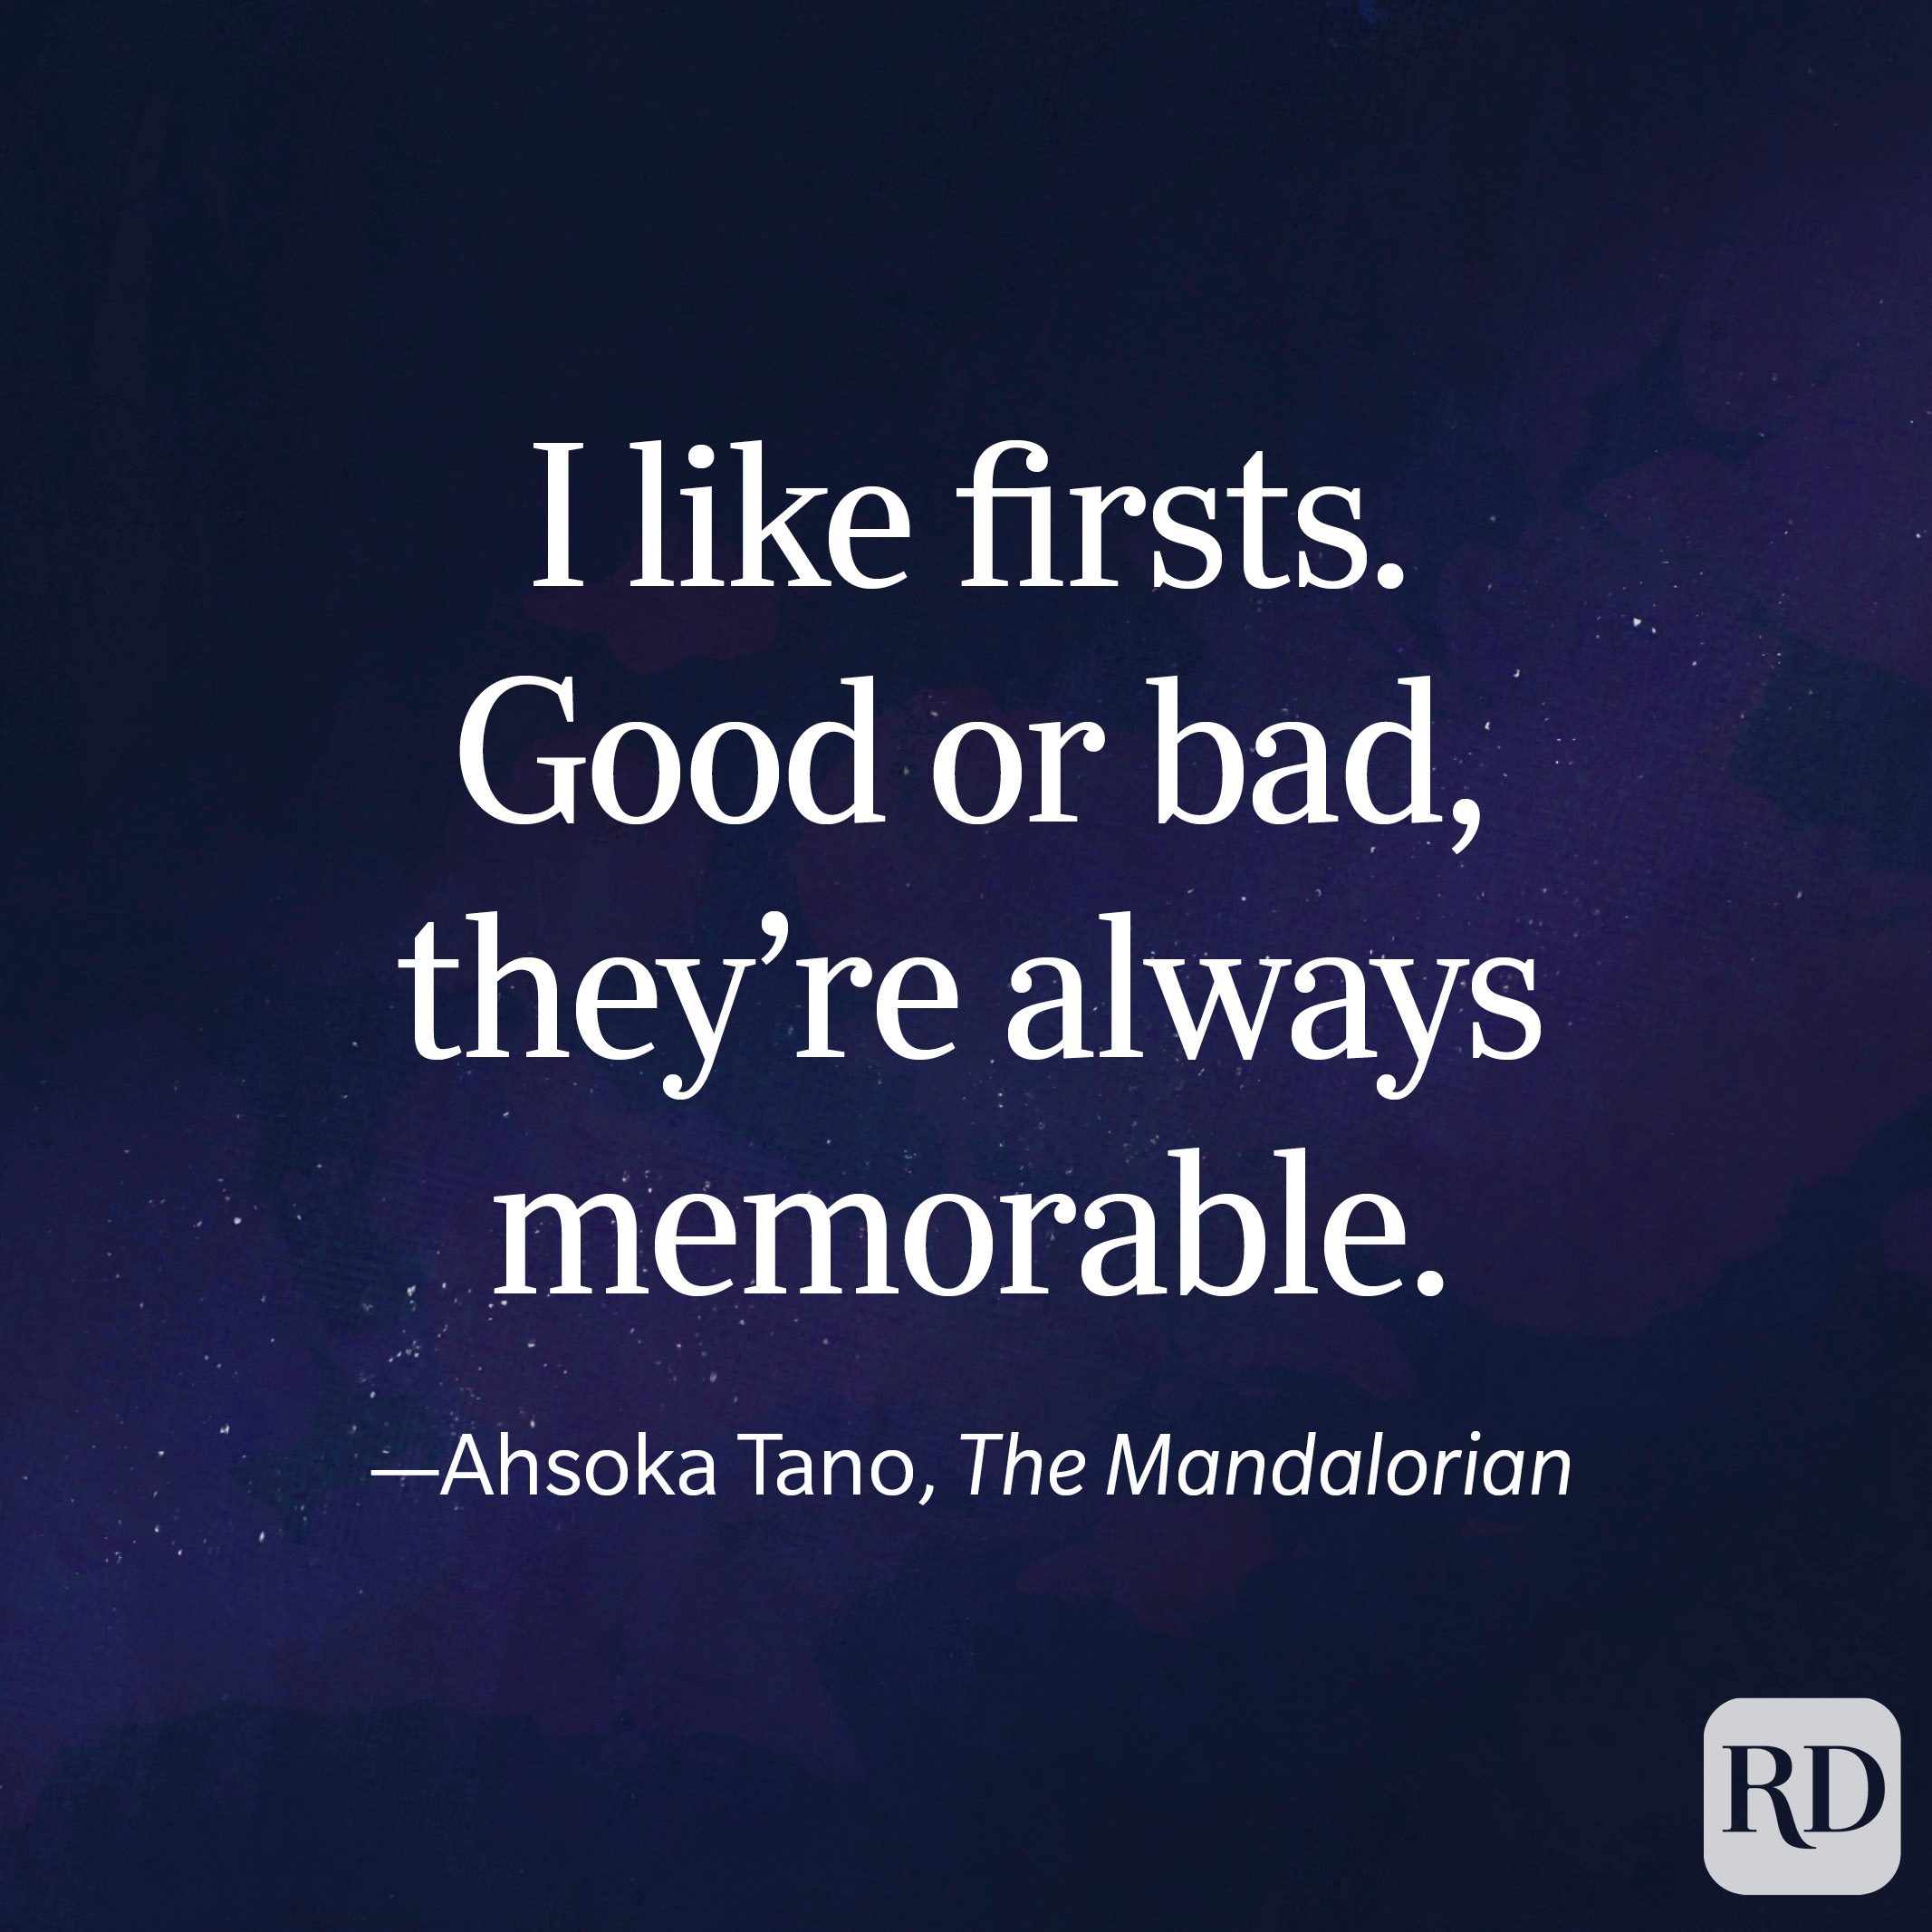 "I like firsts. Good or bad, they're always memorable." —Ahsoka Tano, The Mandalorian